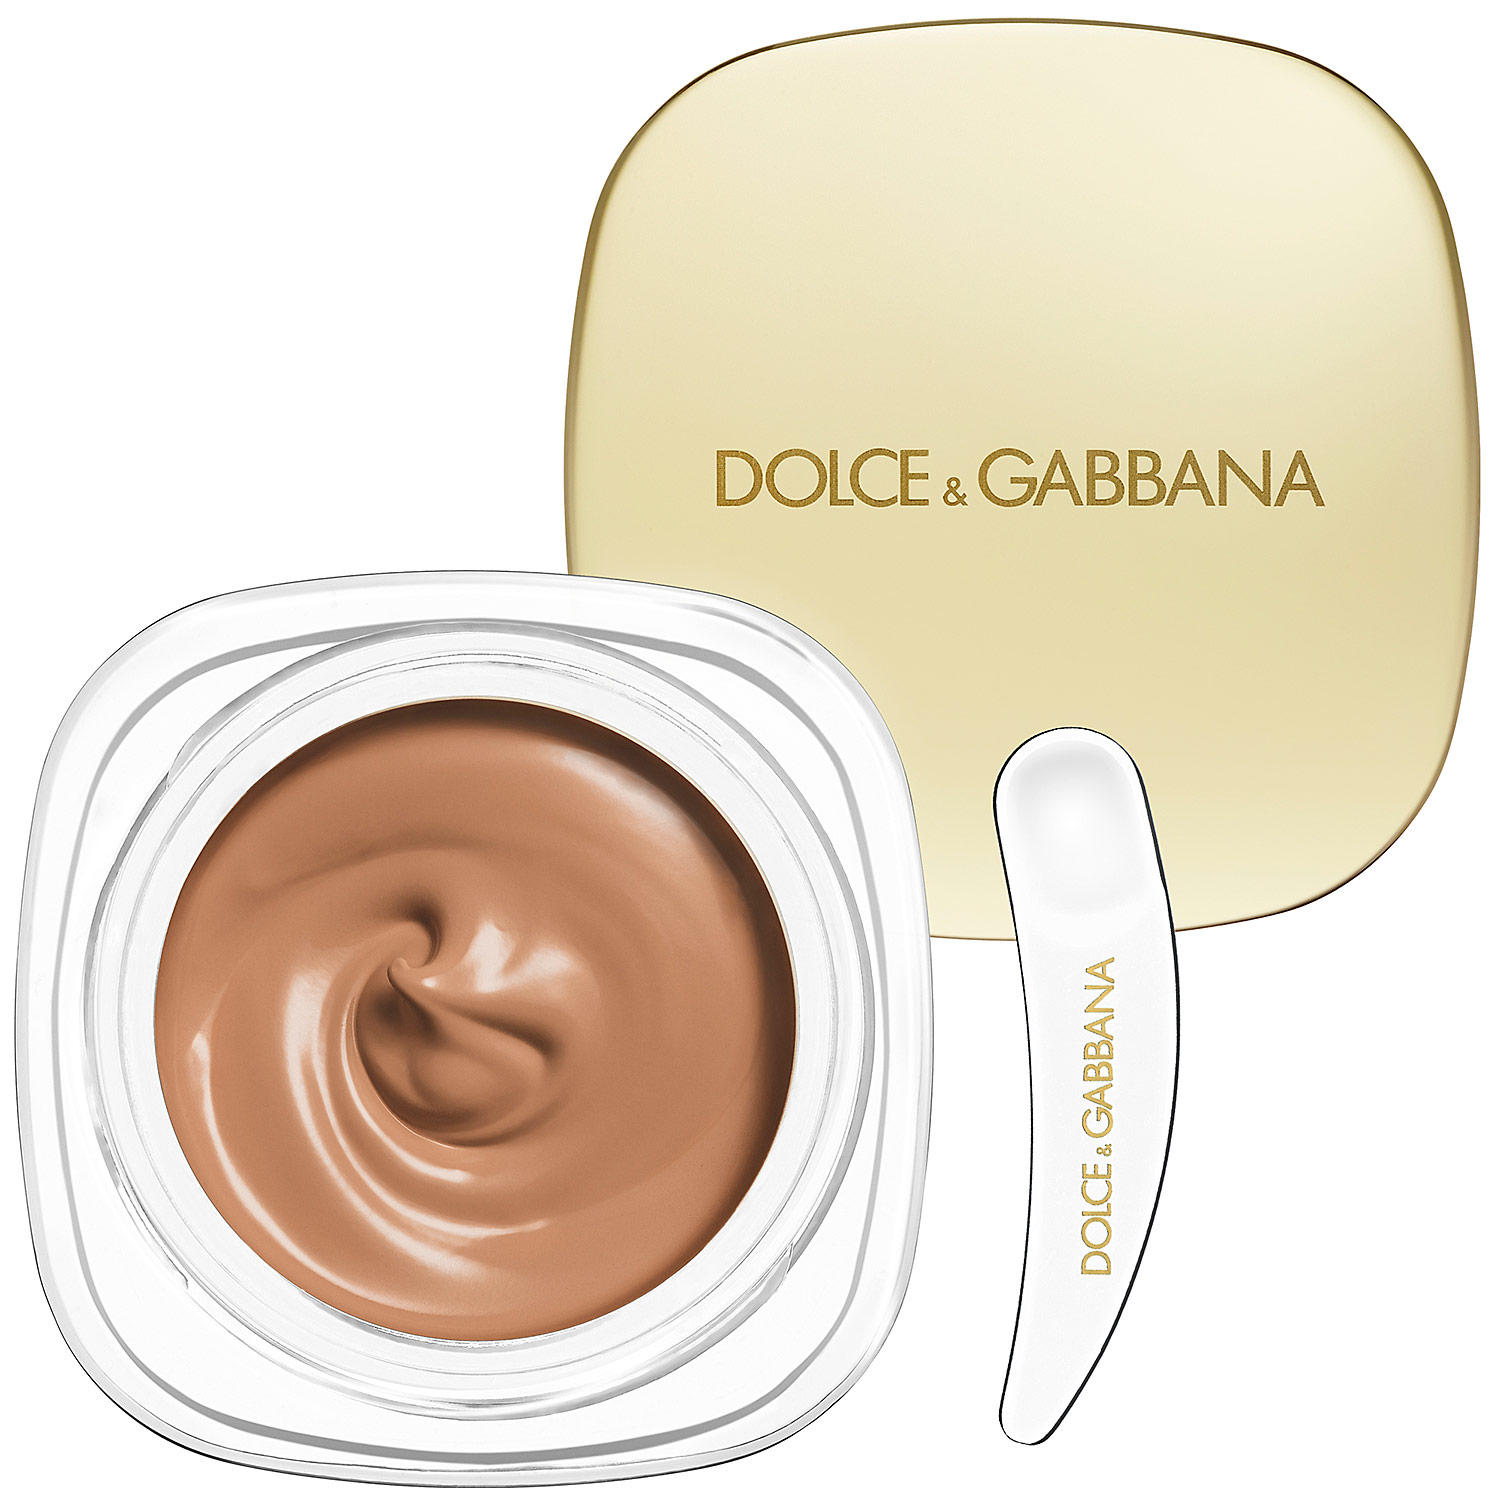 dolce and gabbana cream foundation